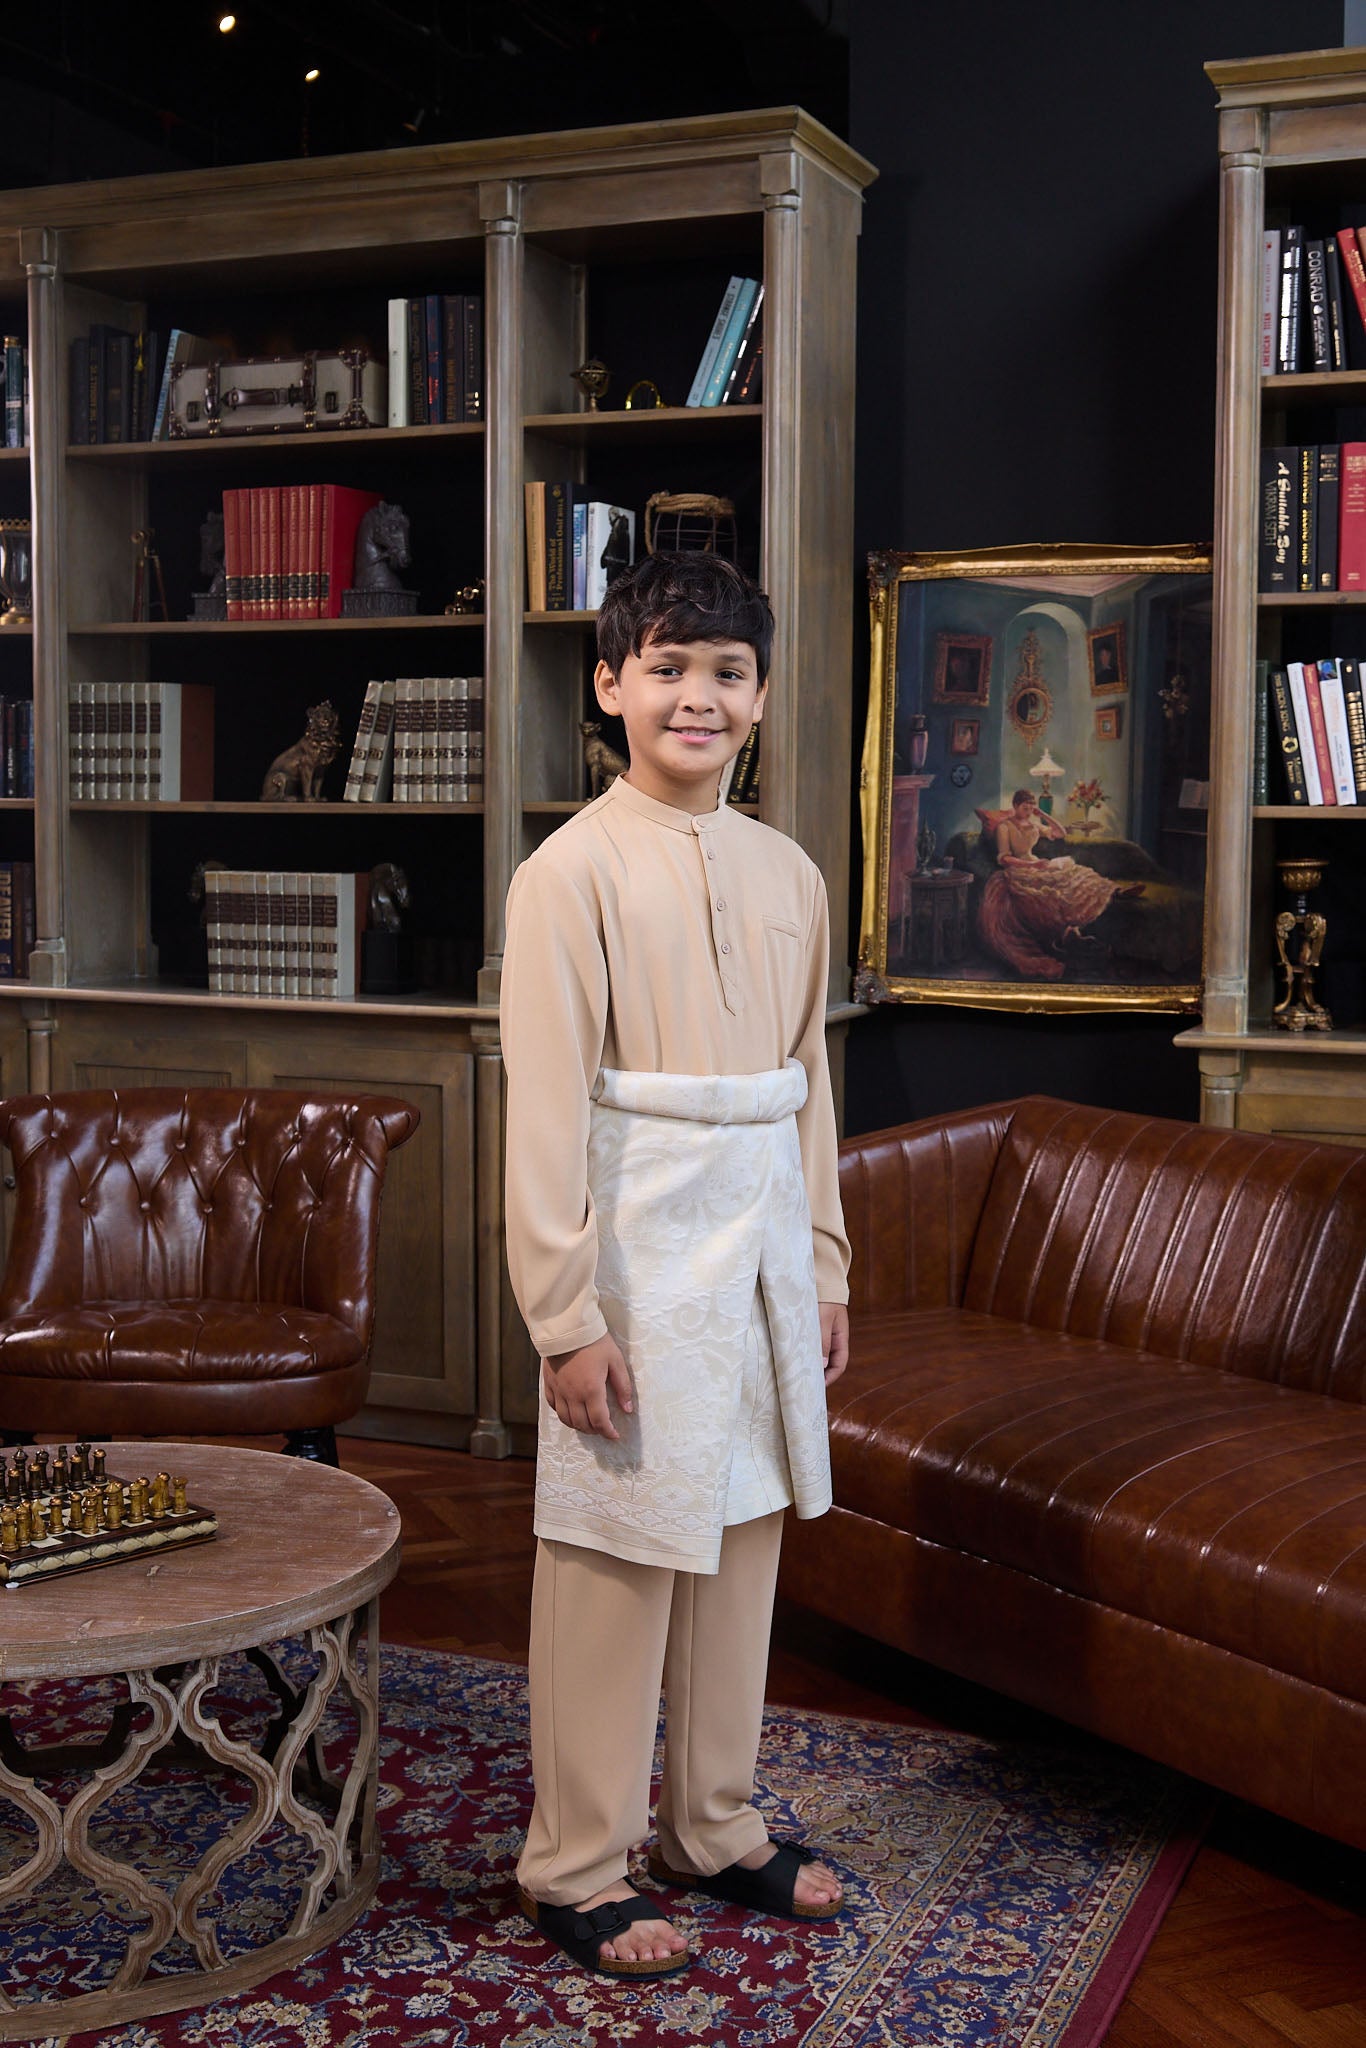 The Warisan Raya Boy Baju Melayu Set Caramel